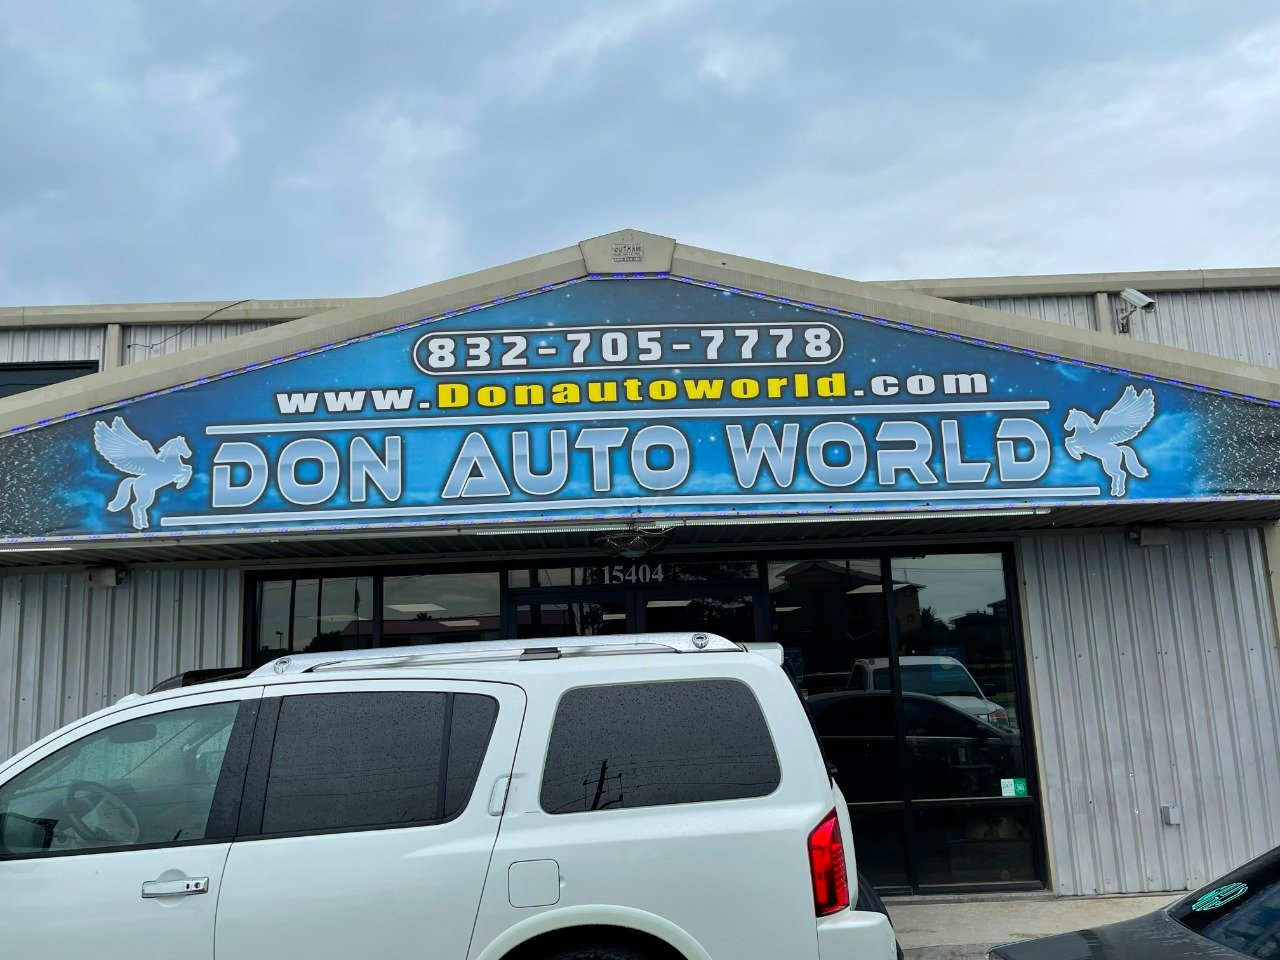 Don Auto World